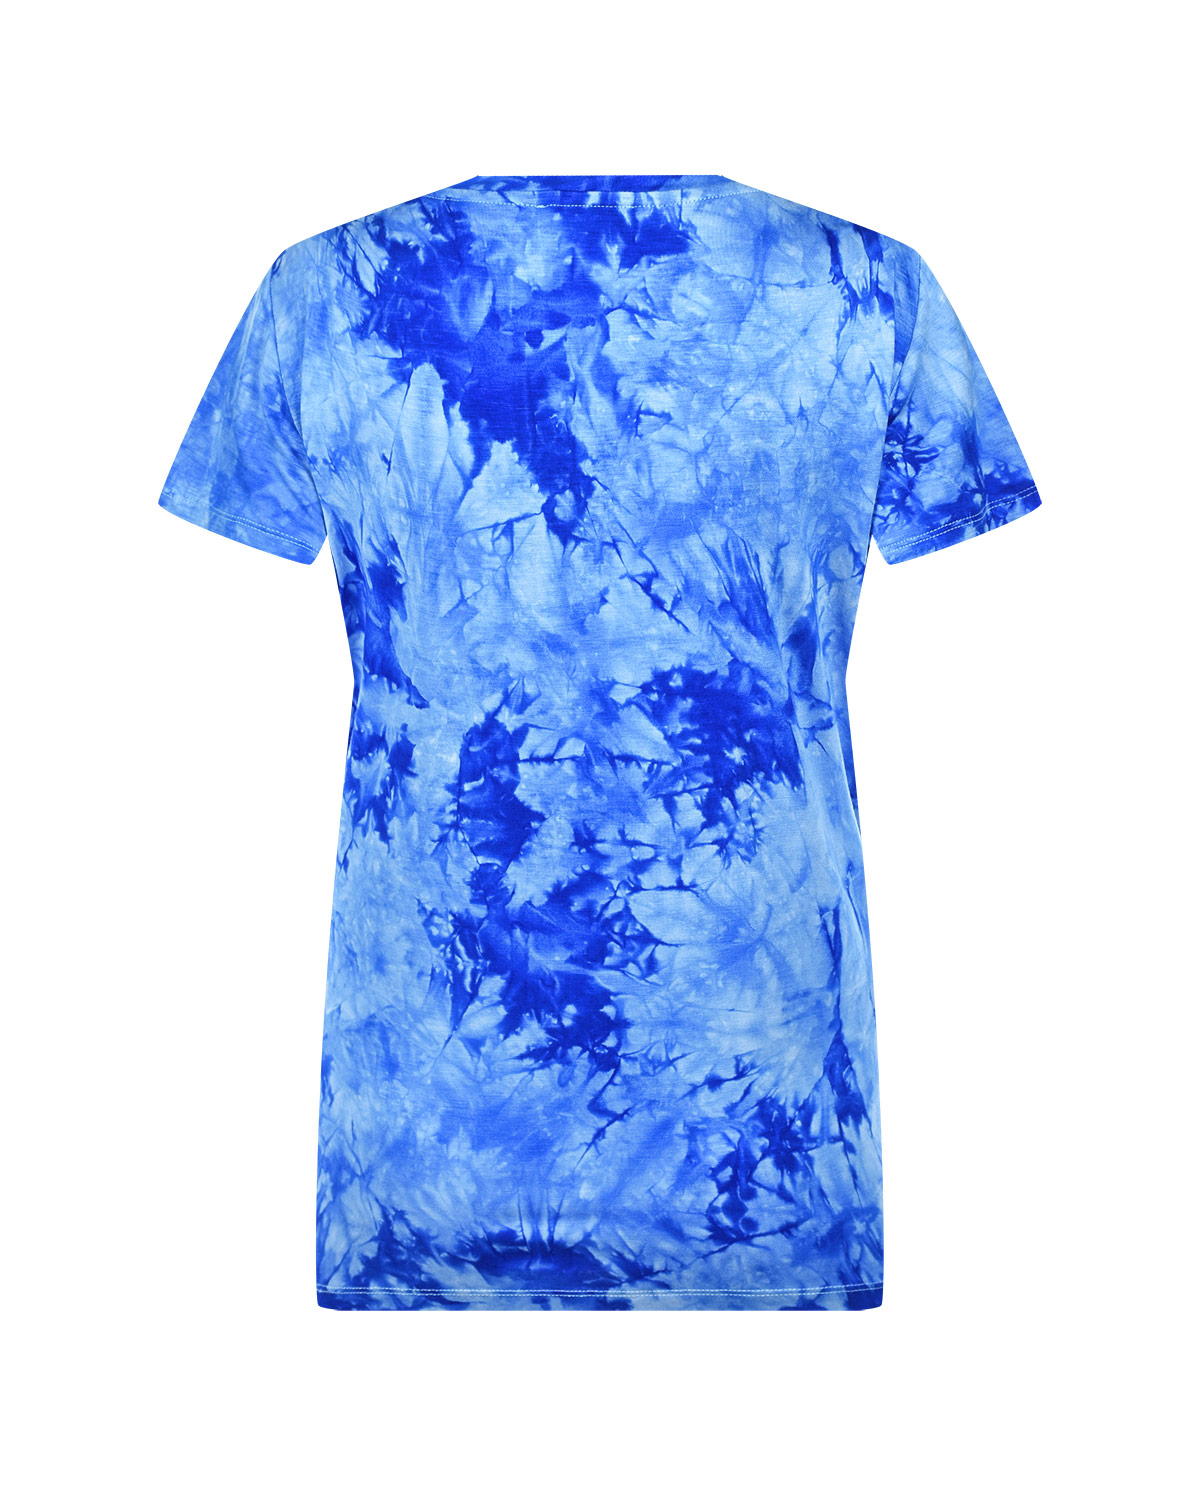 Синяя футболка с надписью "FOLLOW" Dan Maralex, размер 44, цвет нет цвета - фото 5